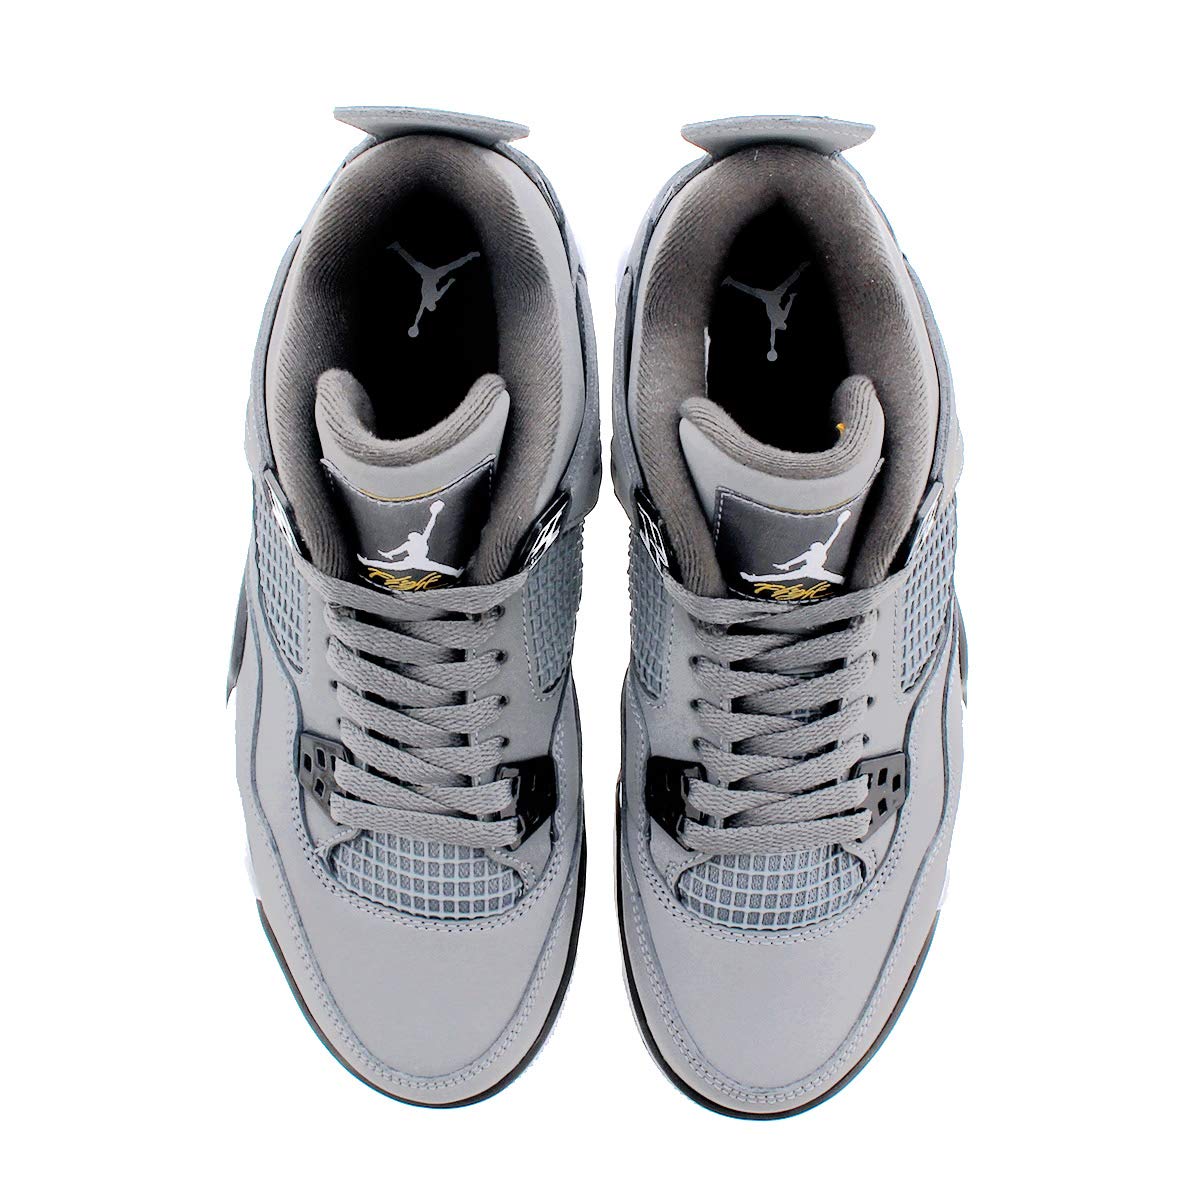 Nike Air Jordan 4 Retro Cool Grey Enfant Taille 7Y GS 408452-007 Chrome-Dark Charcoal